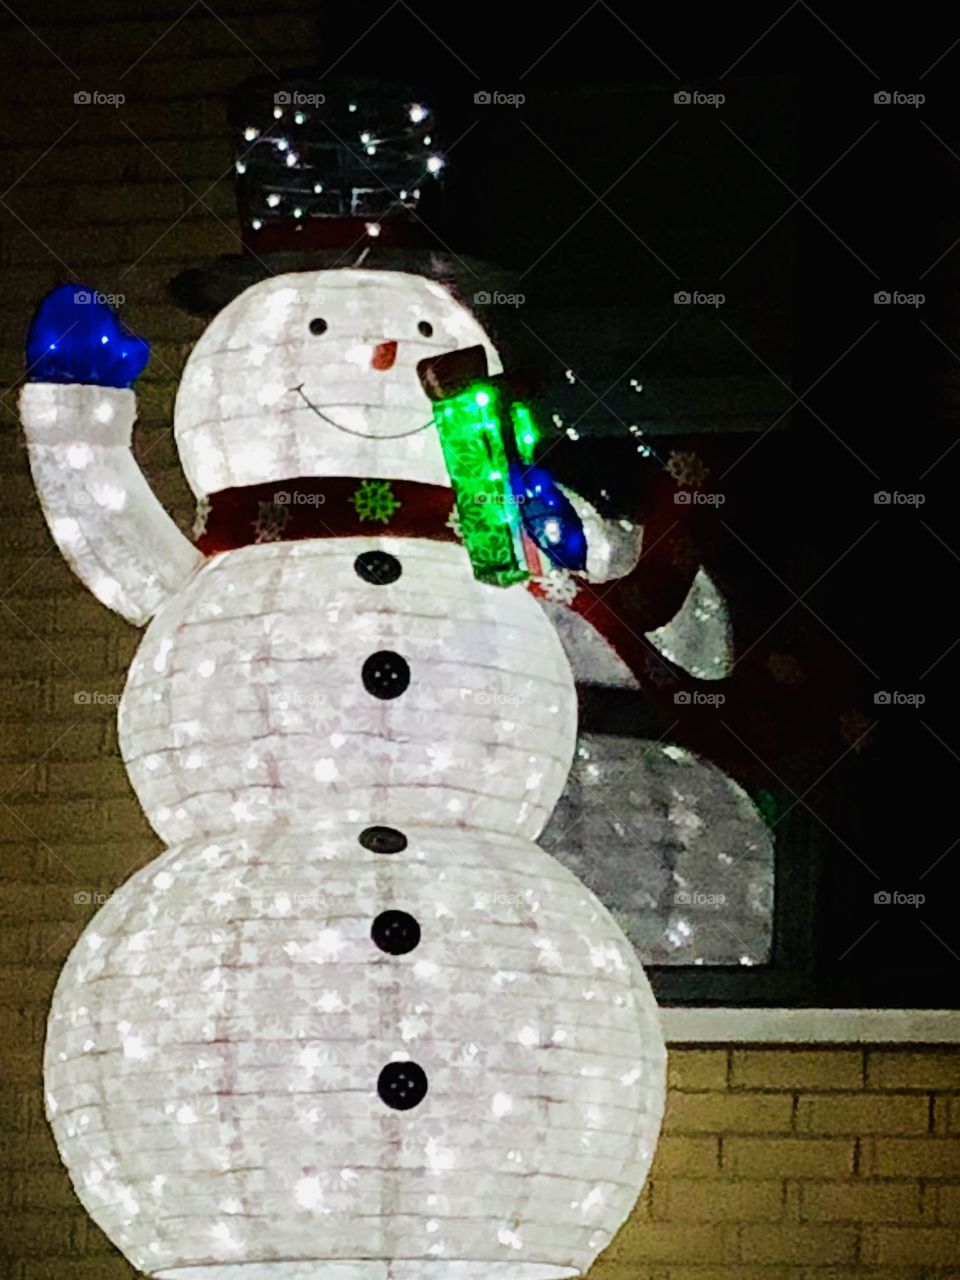 Light Up Snowman01-December 04 2018-Montreal, Quebec, Canada 